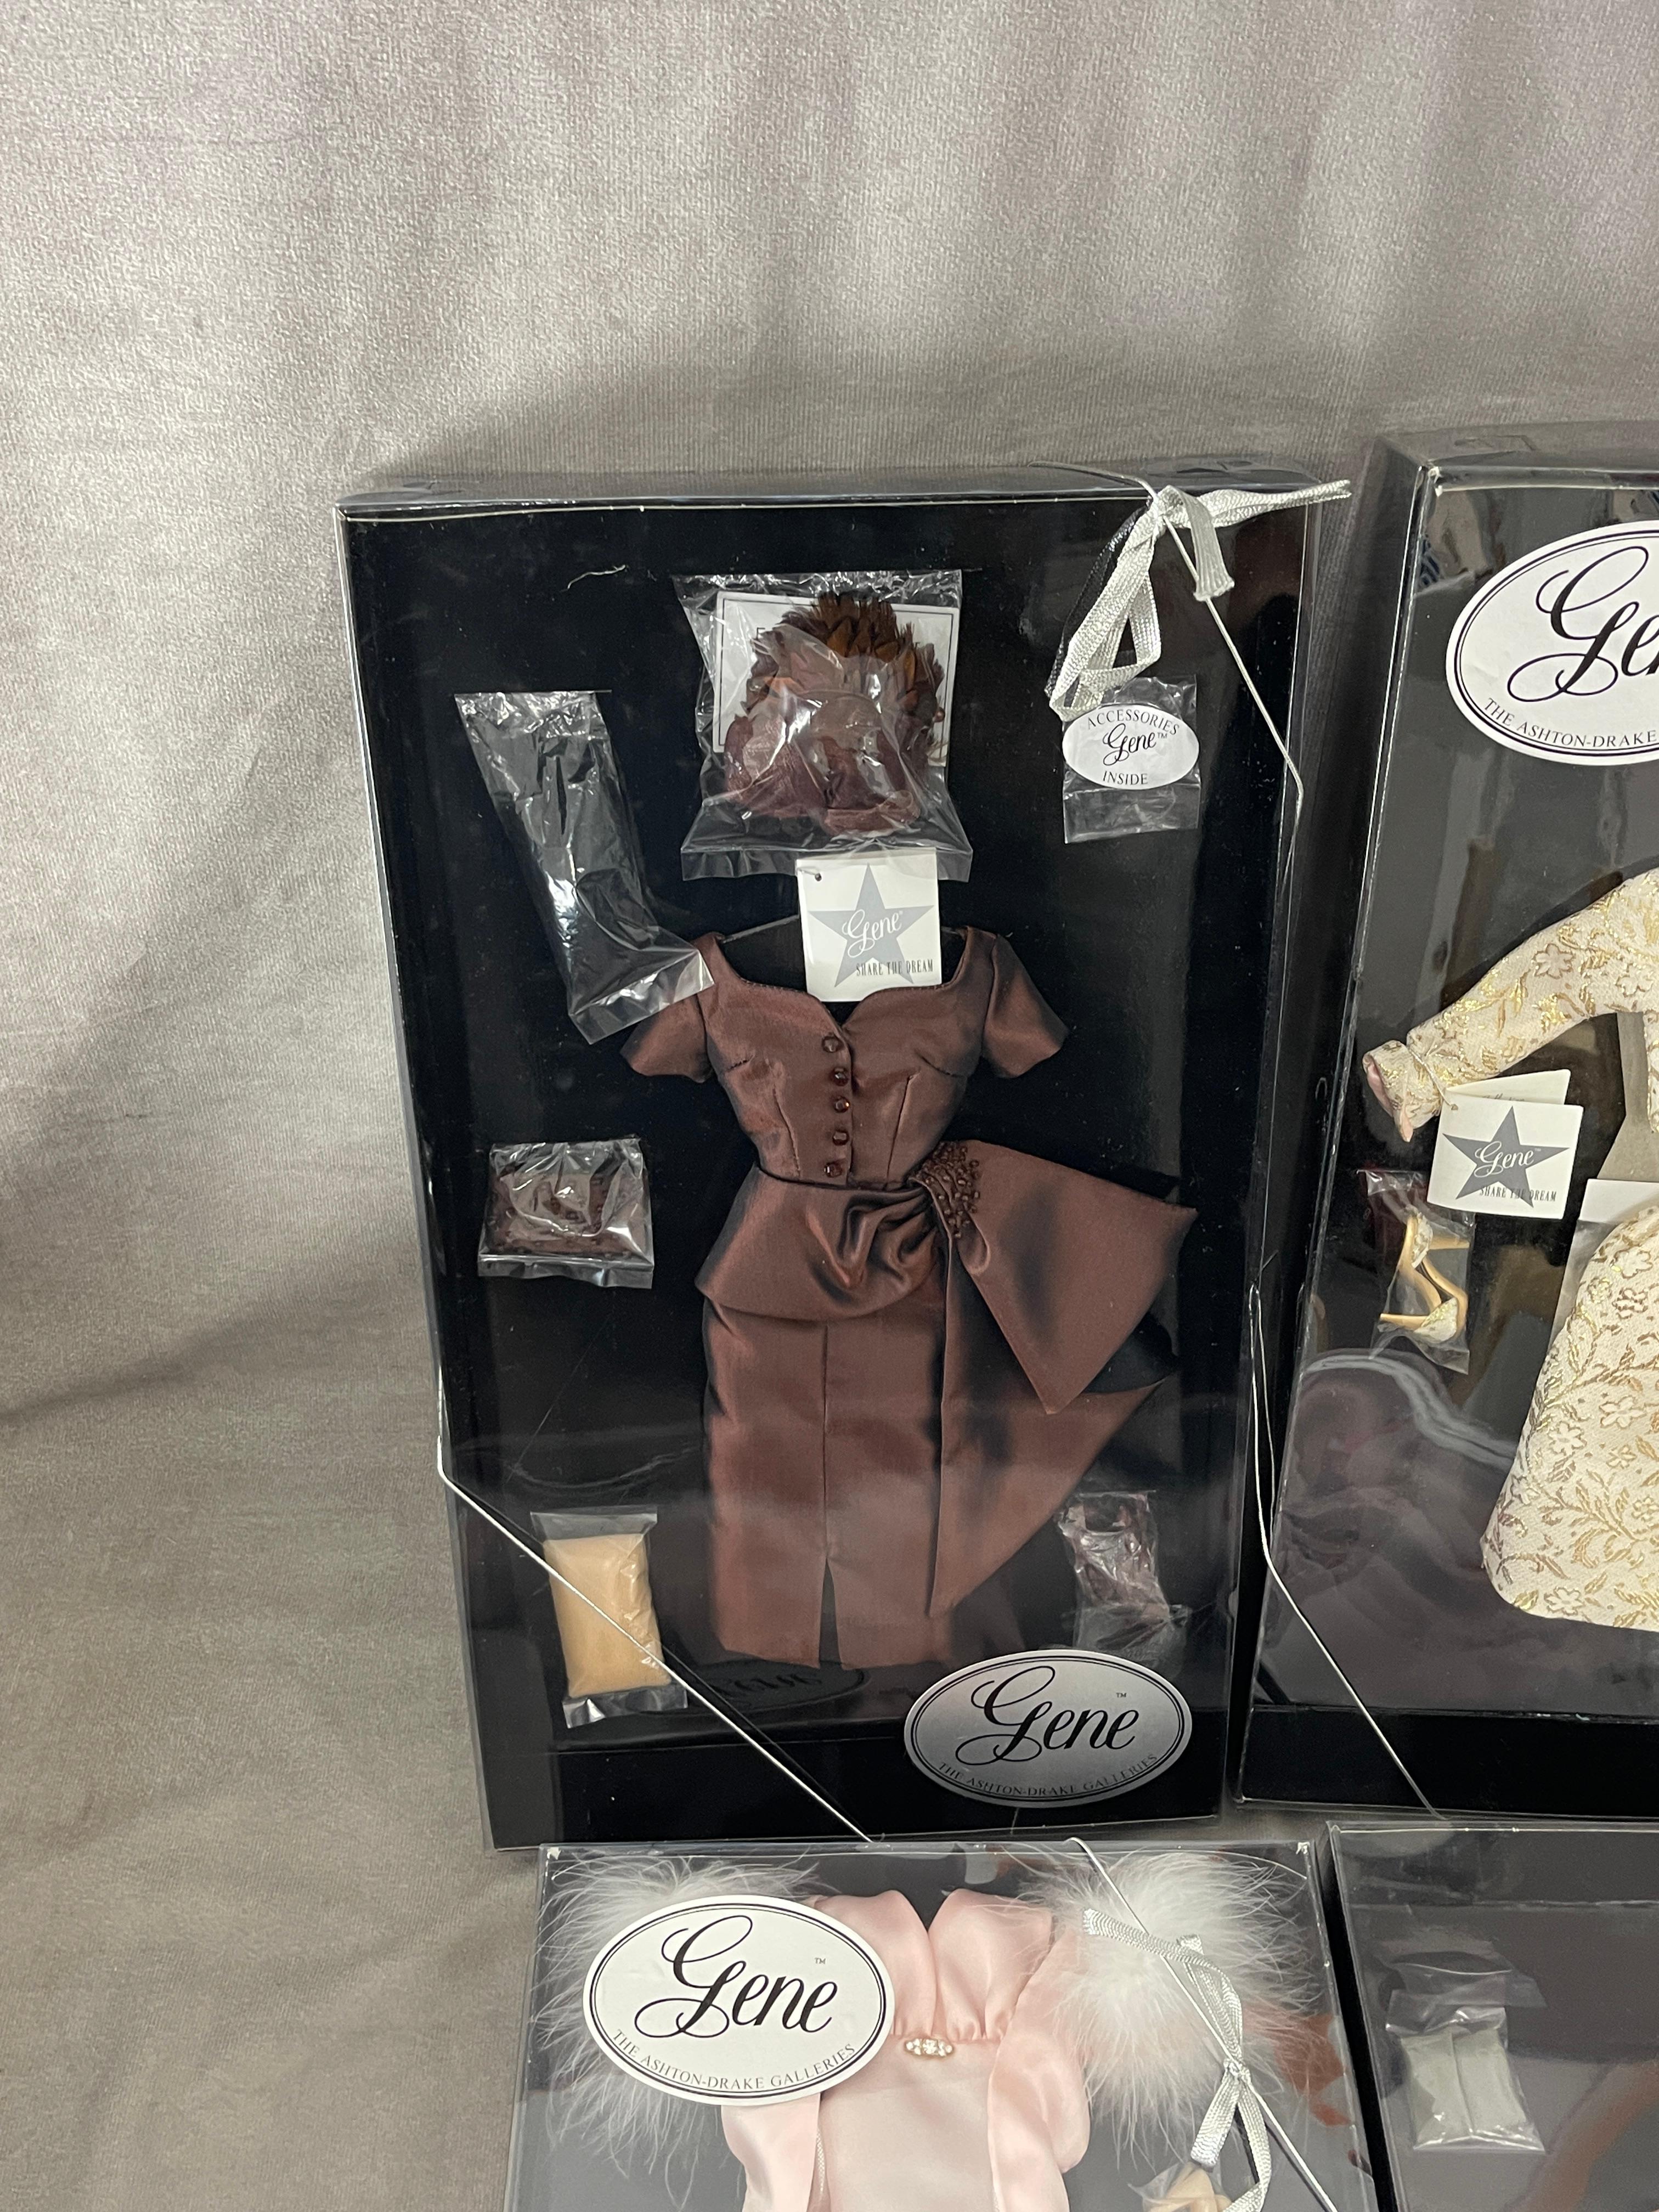 Gene Marshall Doll Fashion Costume Ashton Drake New in Box Collection Lot